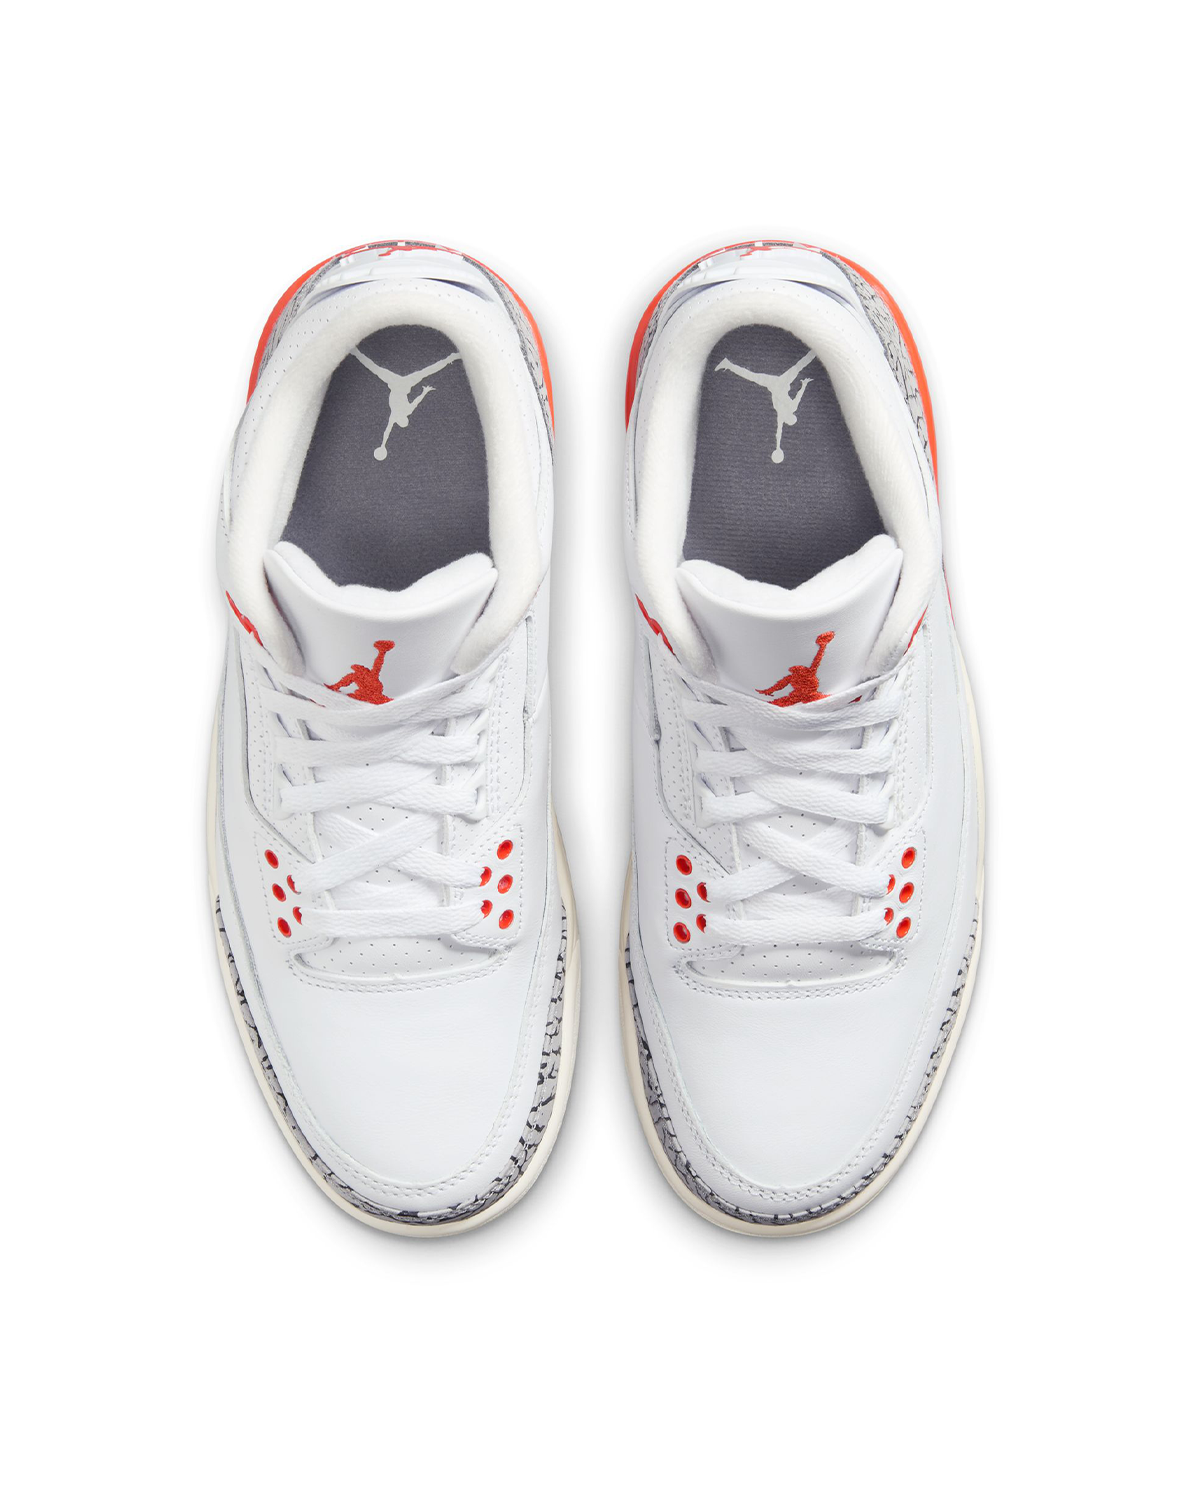 Air Jordan 3 Retro 'Georgia Peach' (Women's)